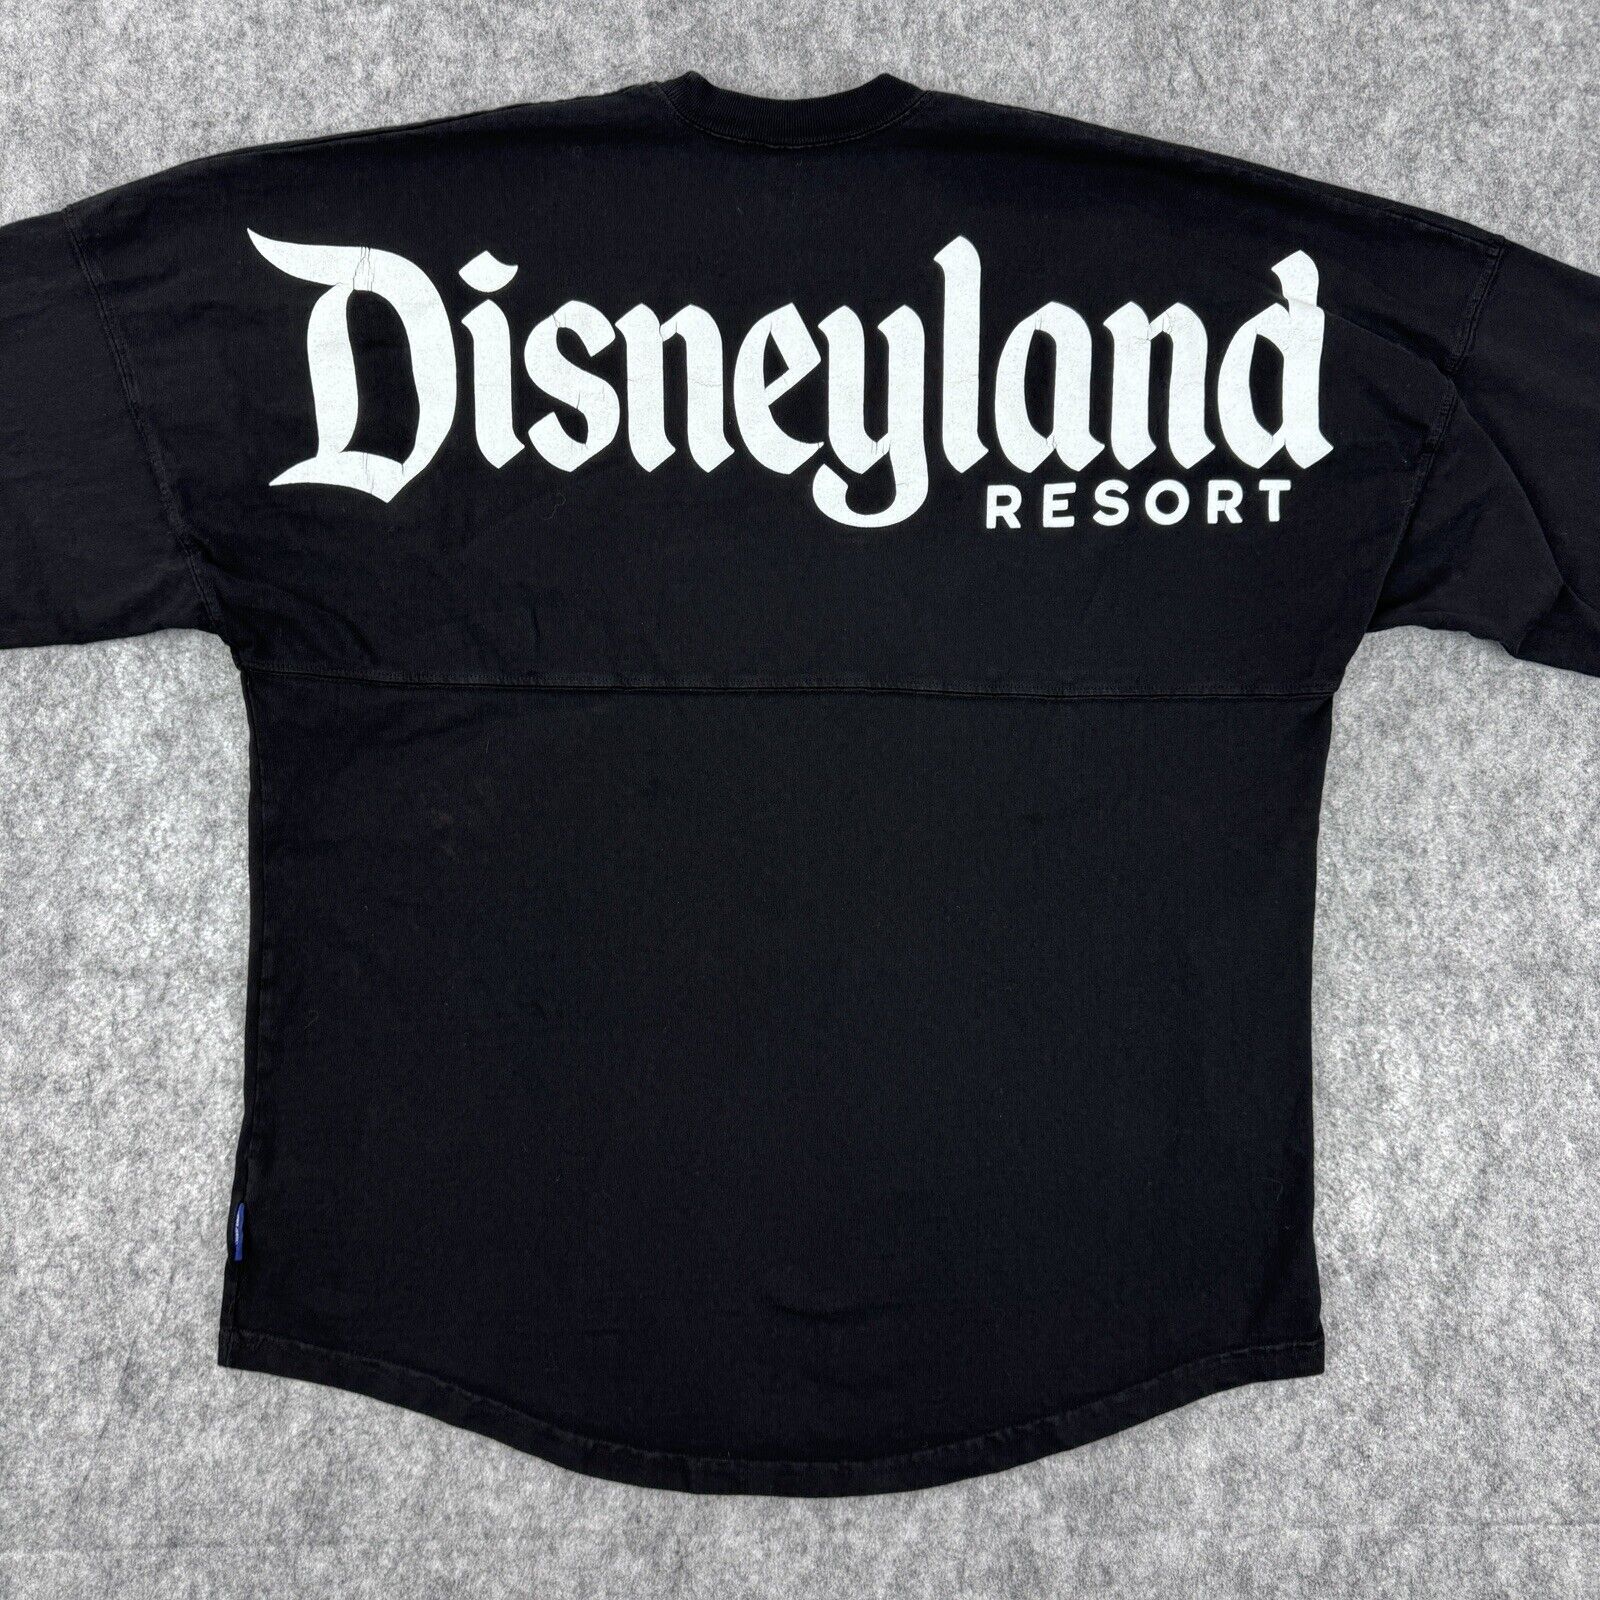 Disneyland Resort Spirit Jersey Medium Black White Spell Out Adult Parks